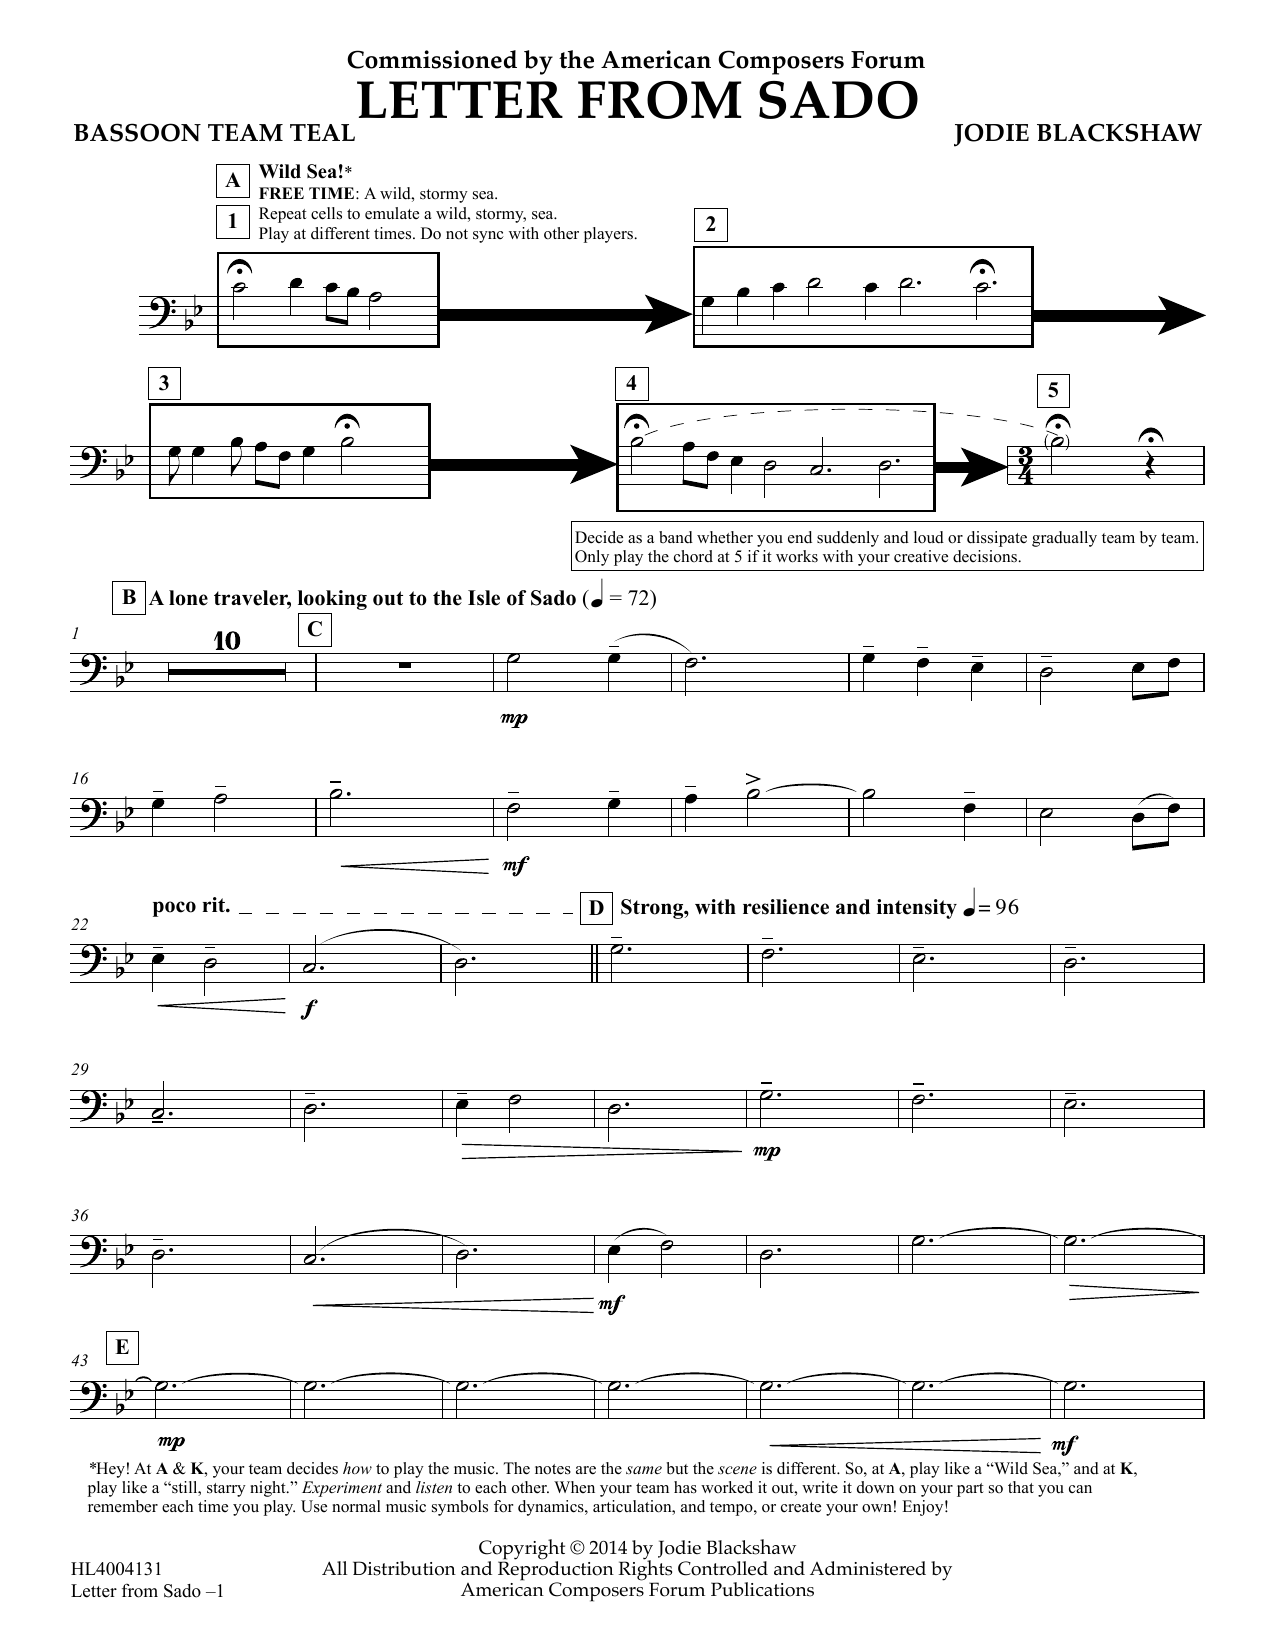 Jodie Blackshaw Letter from Sado - Bassoon Team Teal Sheet Music Notes & Chords for Concert Band - Download or Print PDF